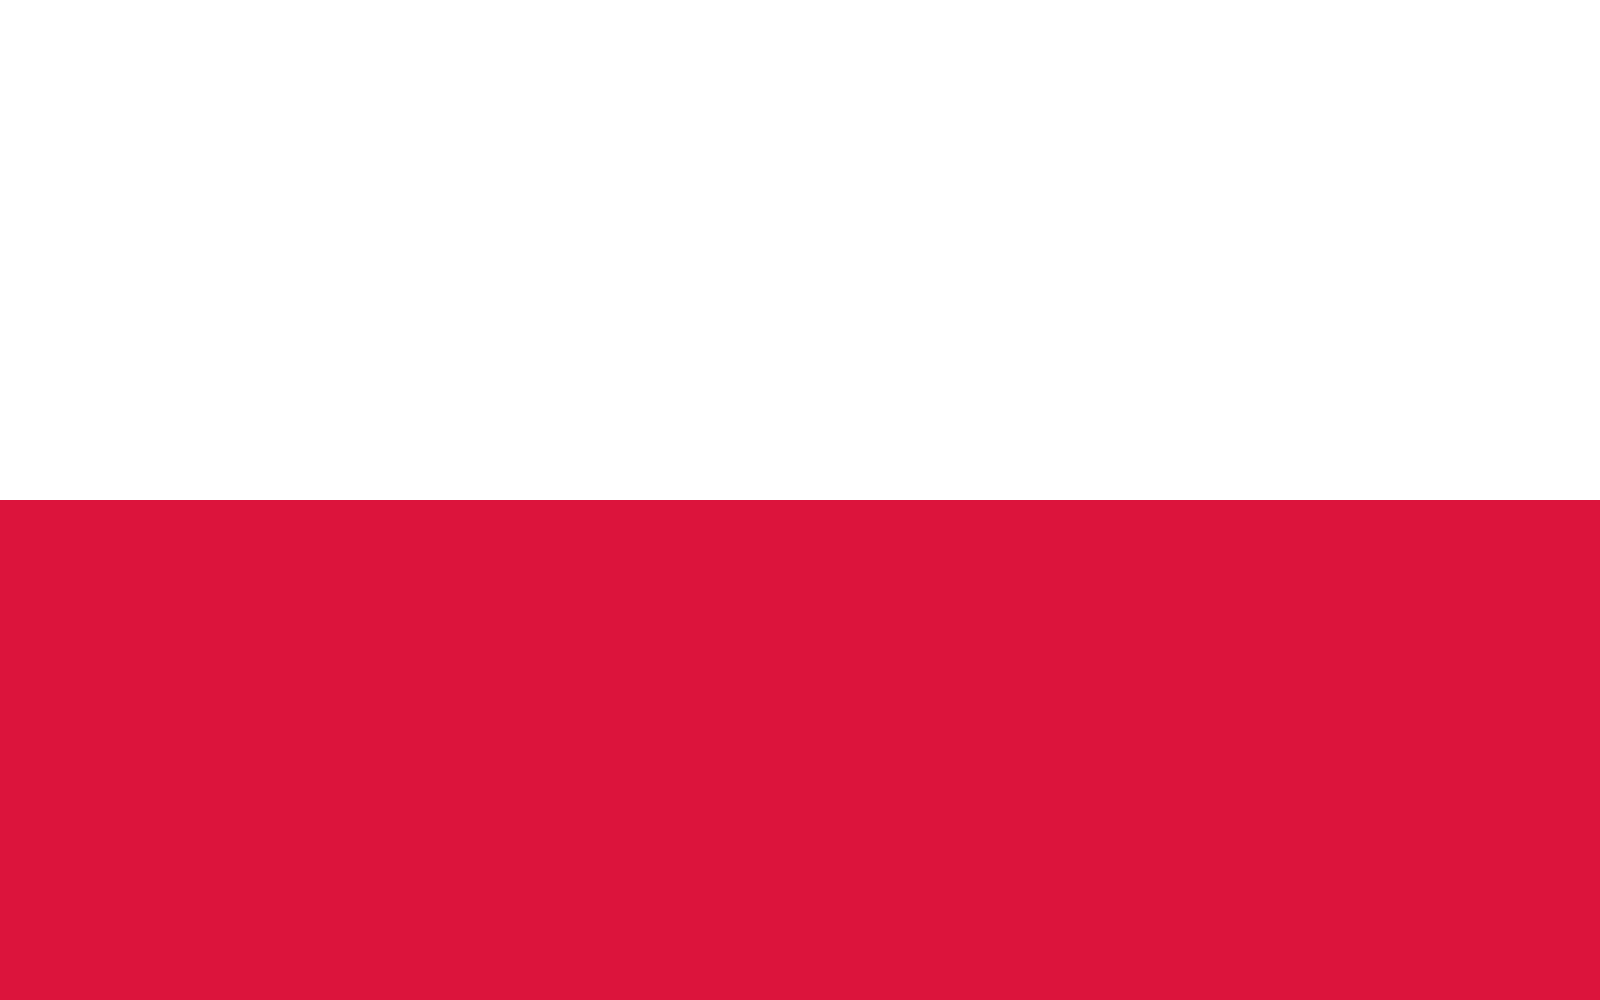 Polens Flagge